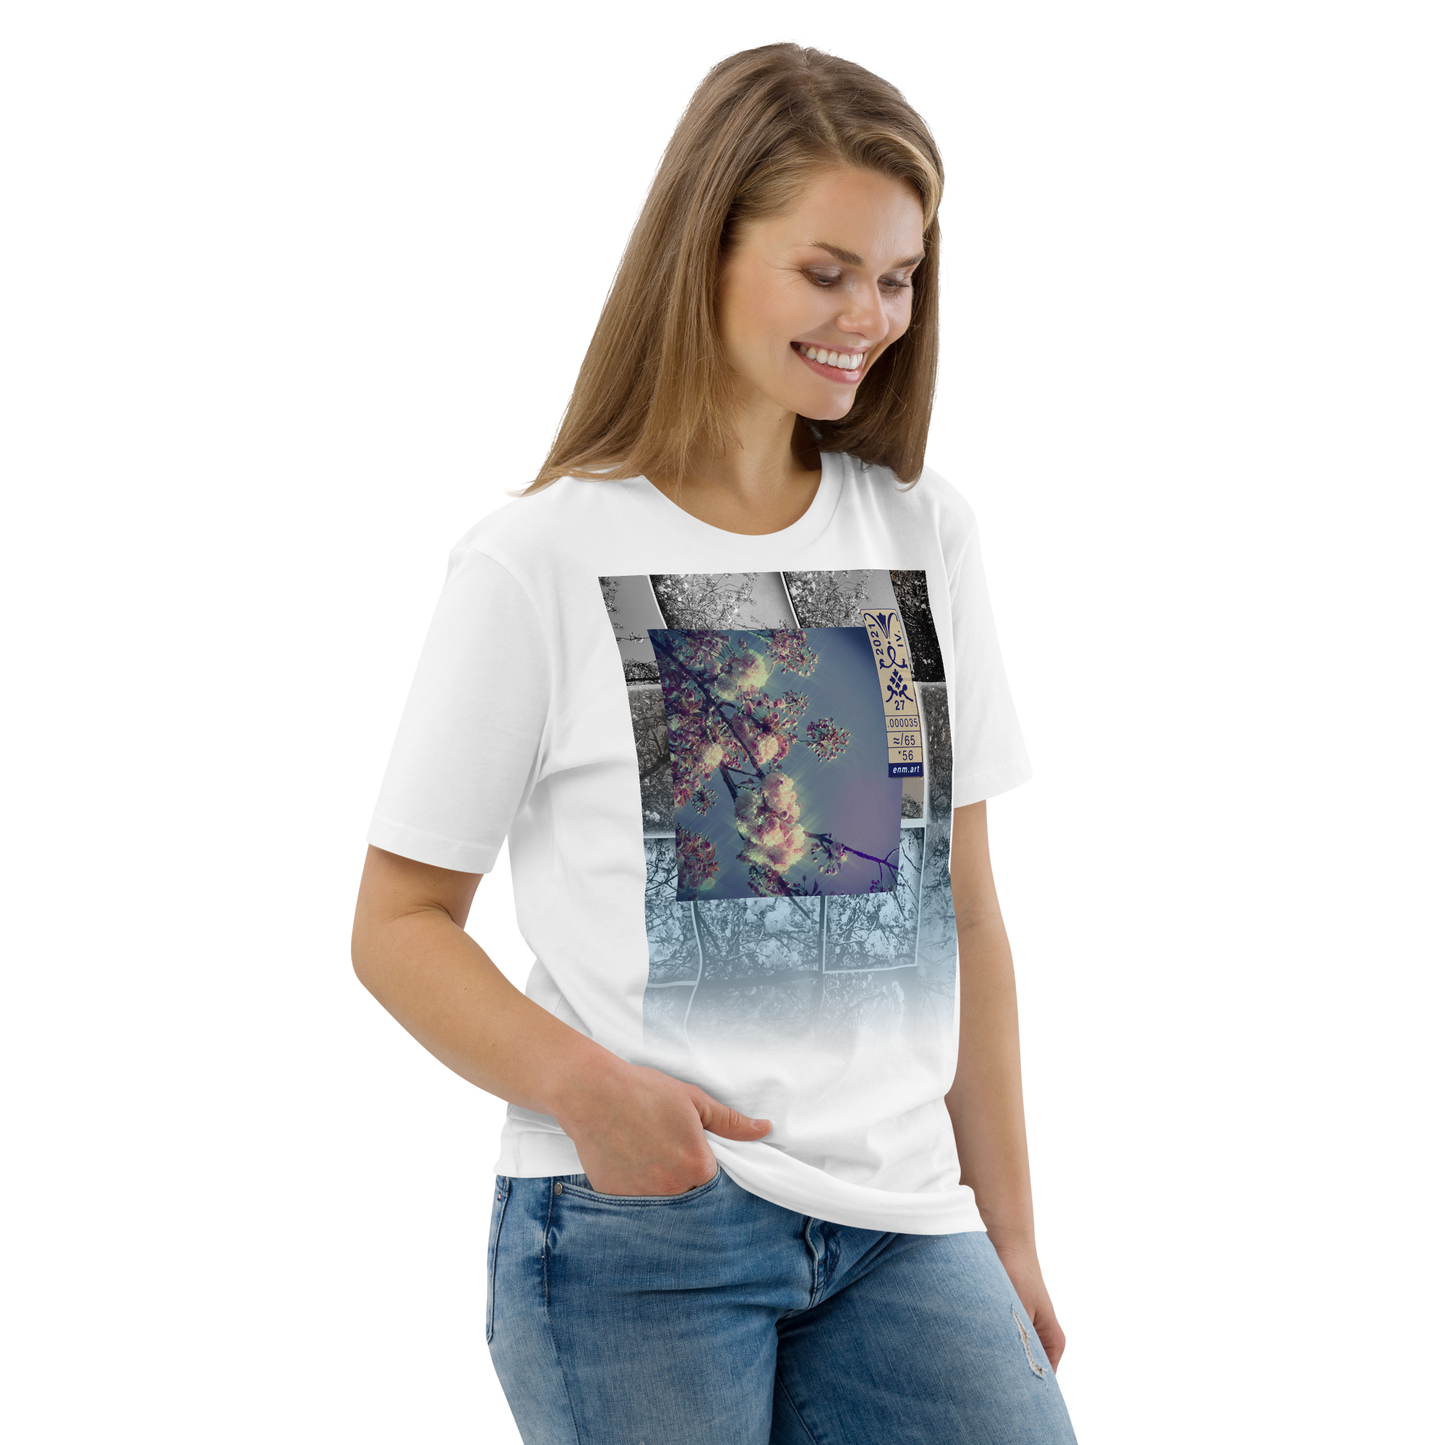 Unisex organic cotton t-shirt 'Luminous Fragrance (thumb)' artist-authorised edition of original artwork by Enmempin N. Midelobo